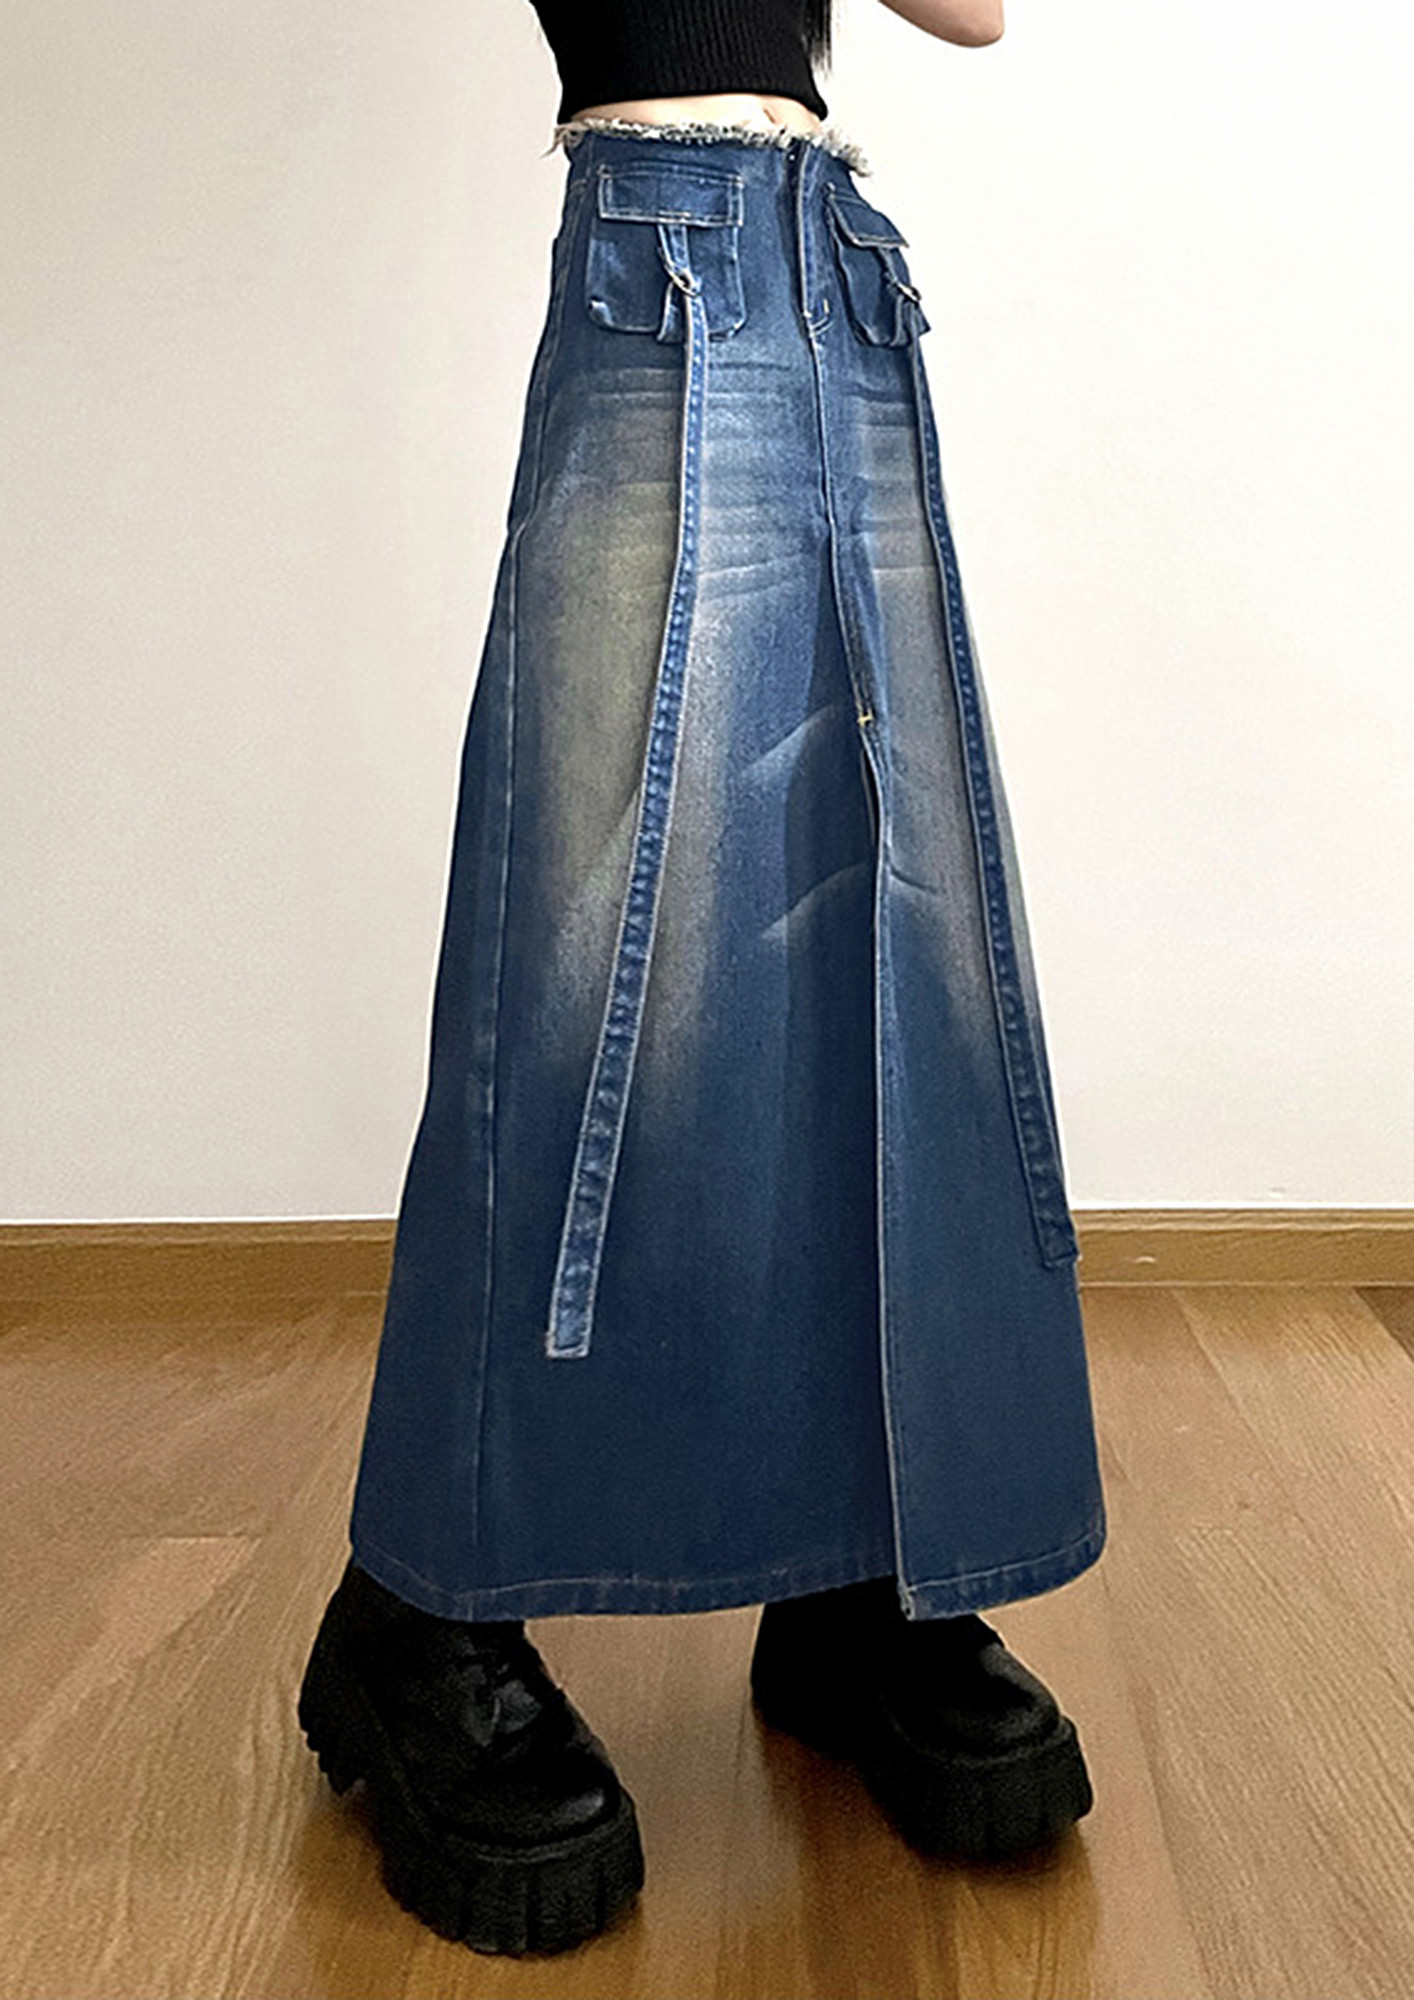 Trending: Denim Midi Skirts For Spring & Summer (6 Outfits) - The Mom Edit